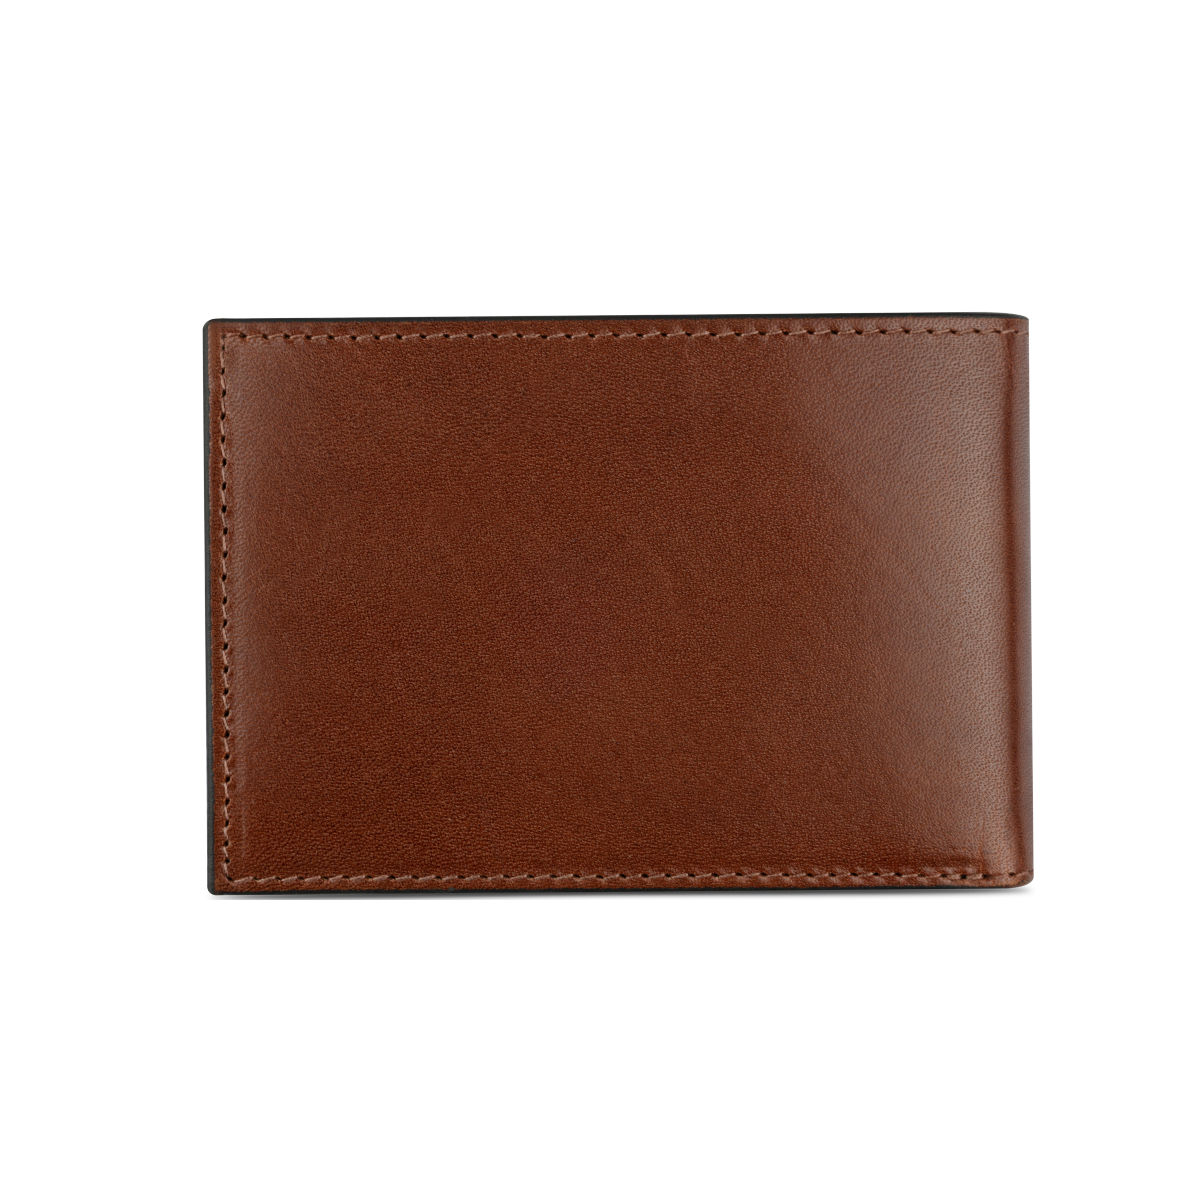 Bugatti men\'s leather wallet brown cognac 